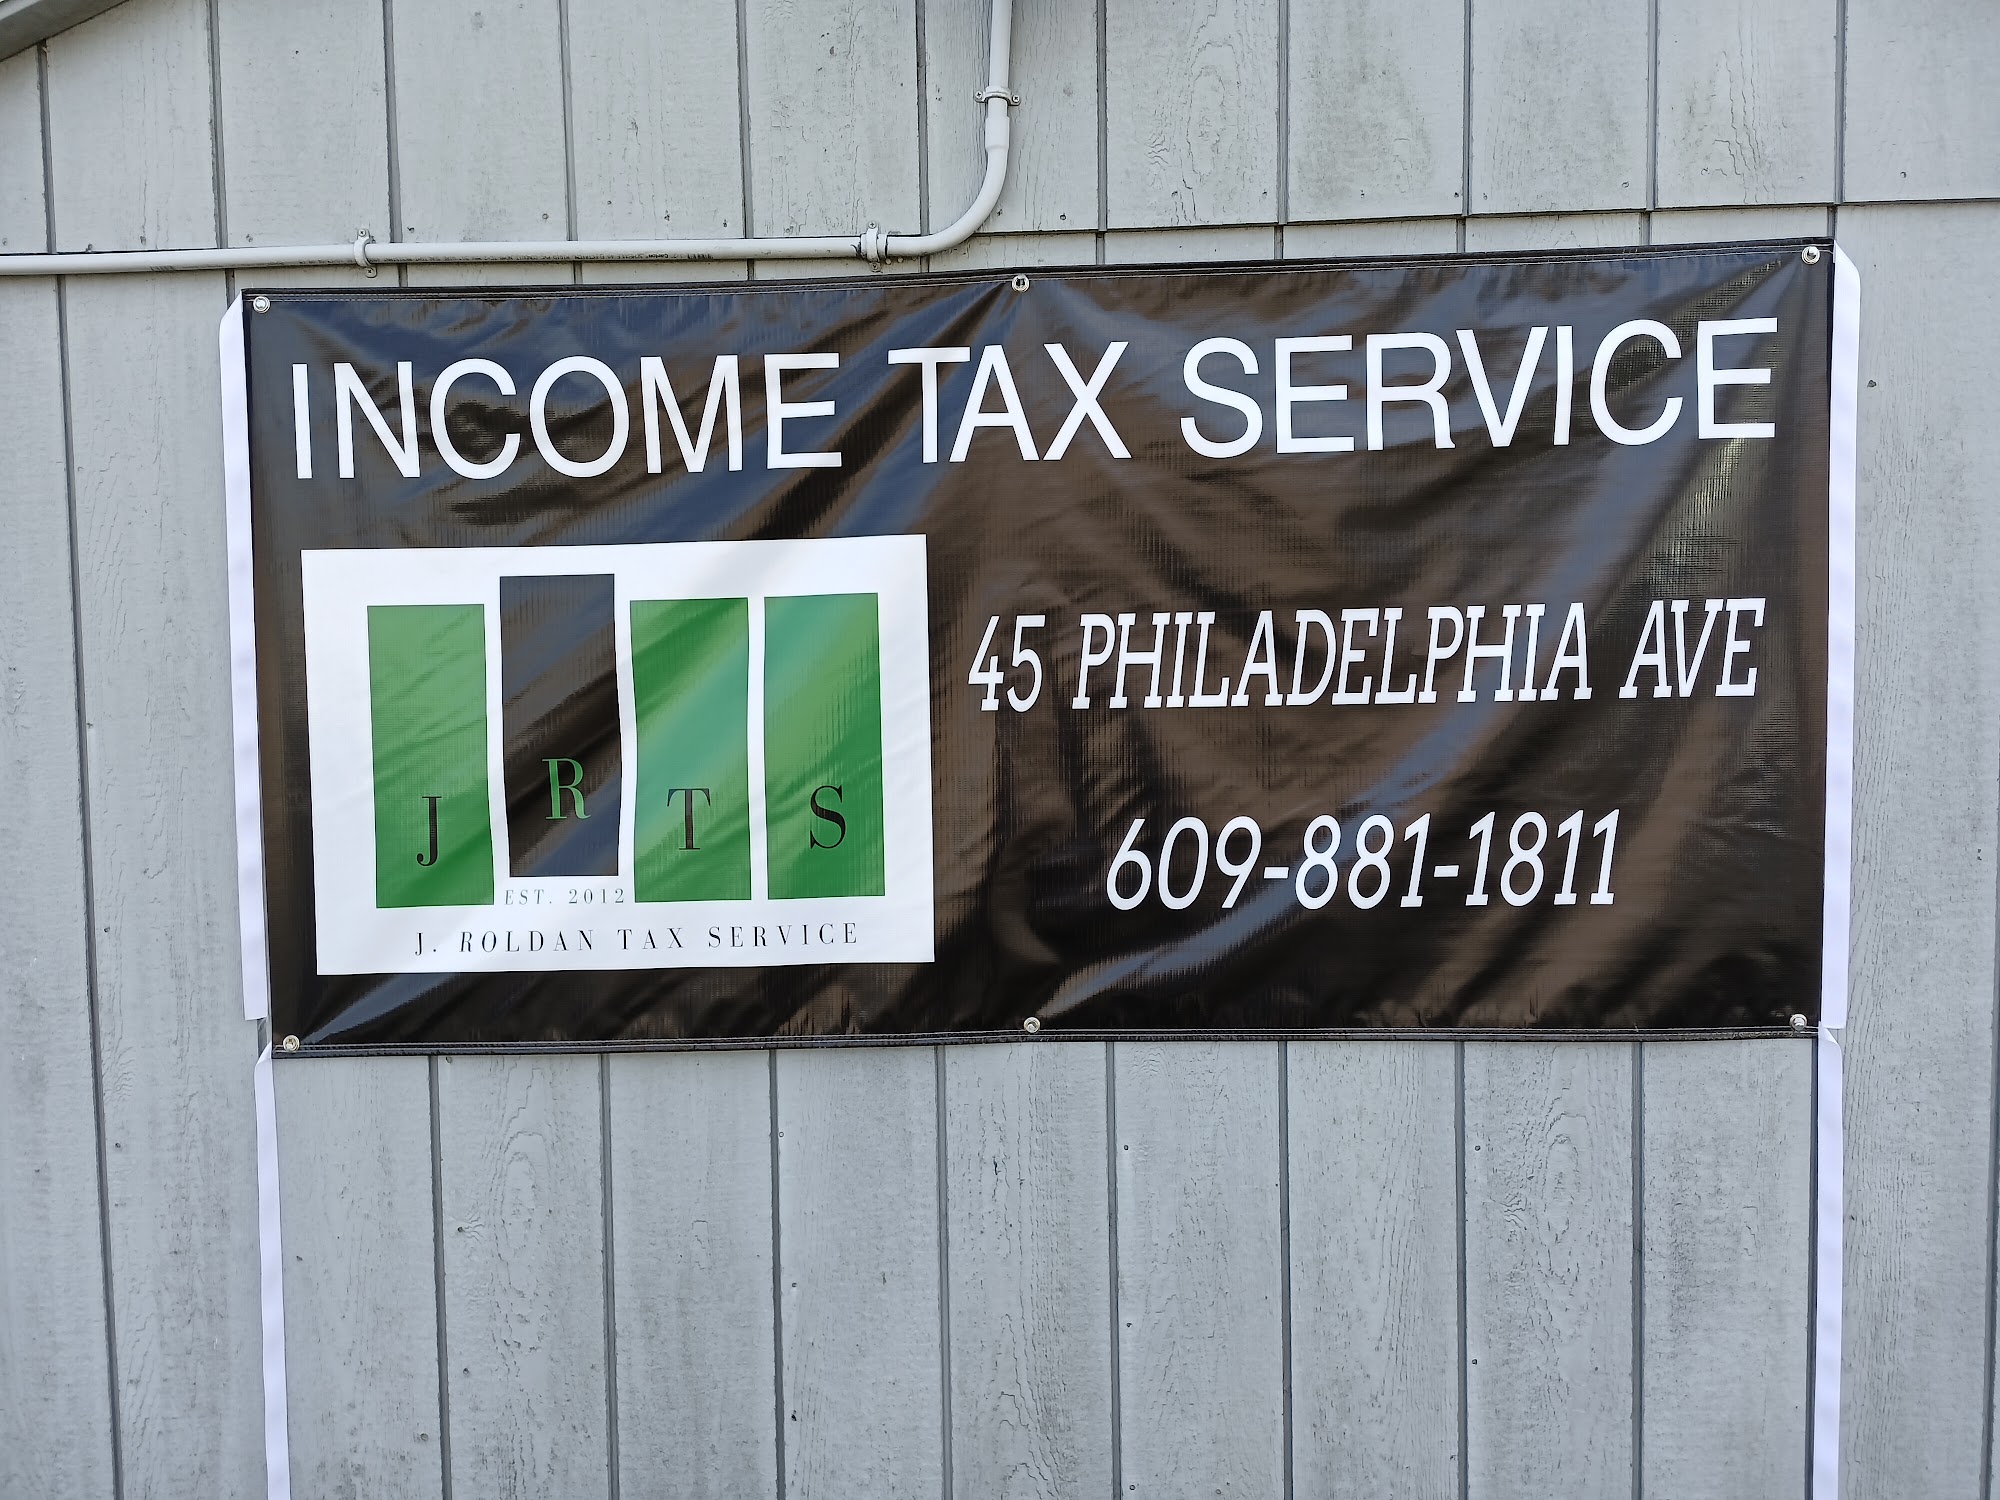 J Roldan Tax Service 45 Philadelphia Ave, Egg Harbor City New Jersey 08215